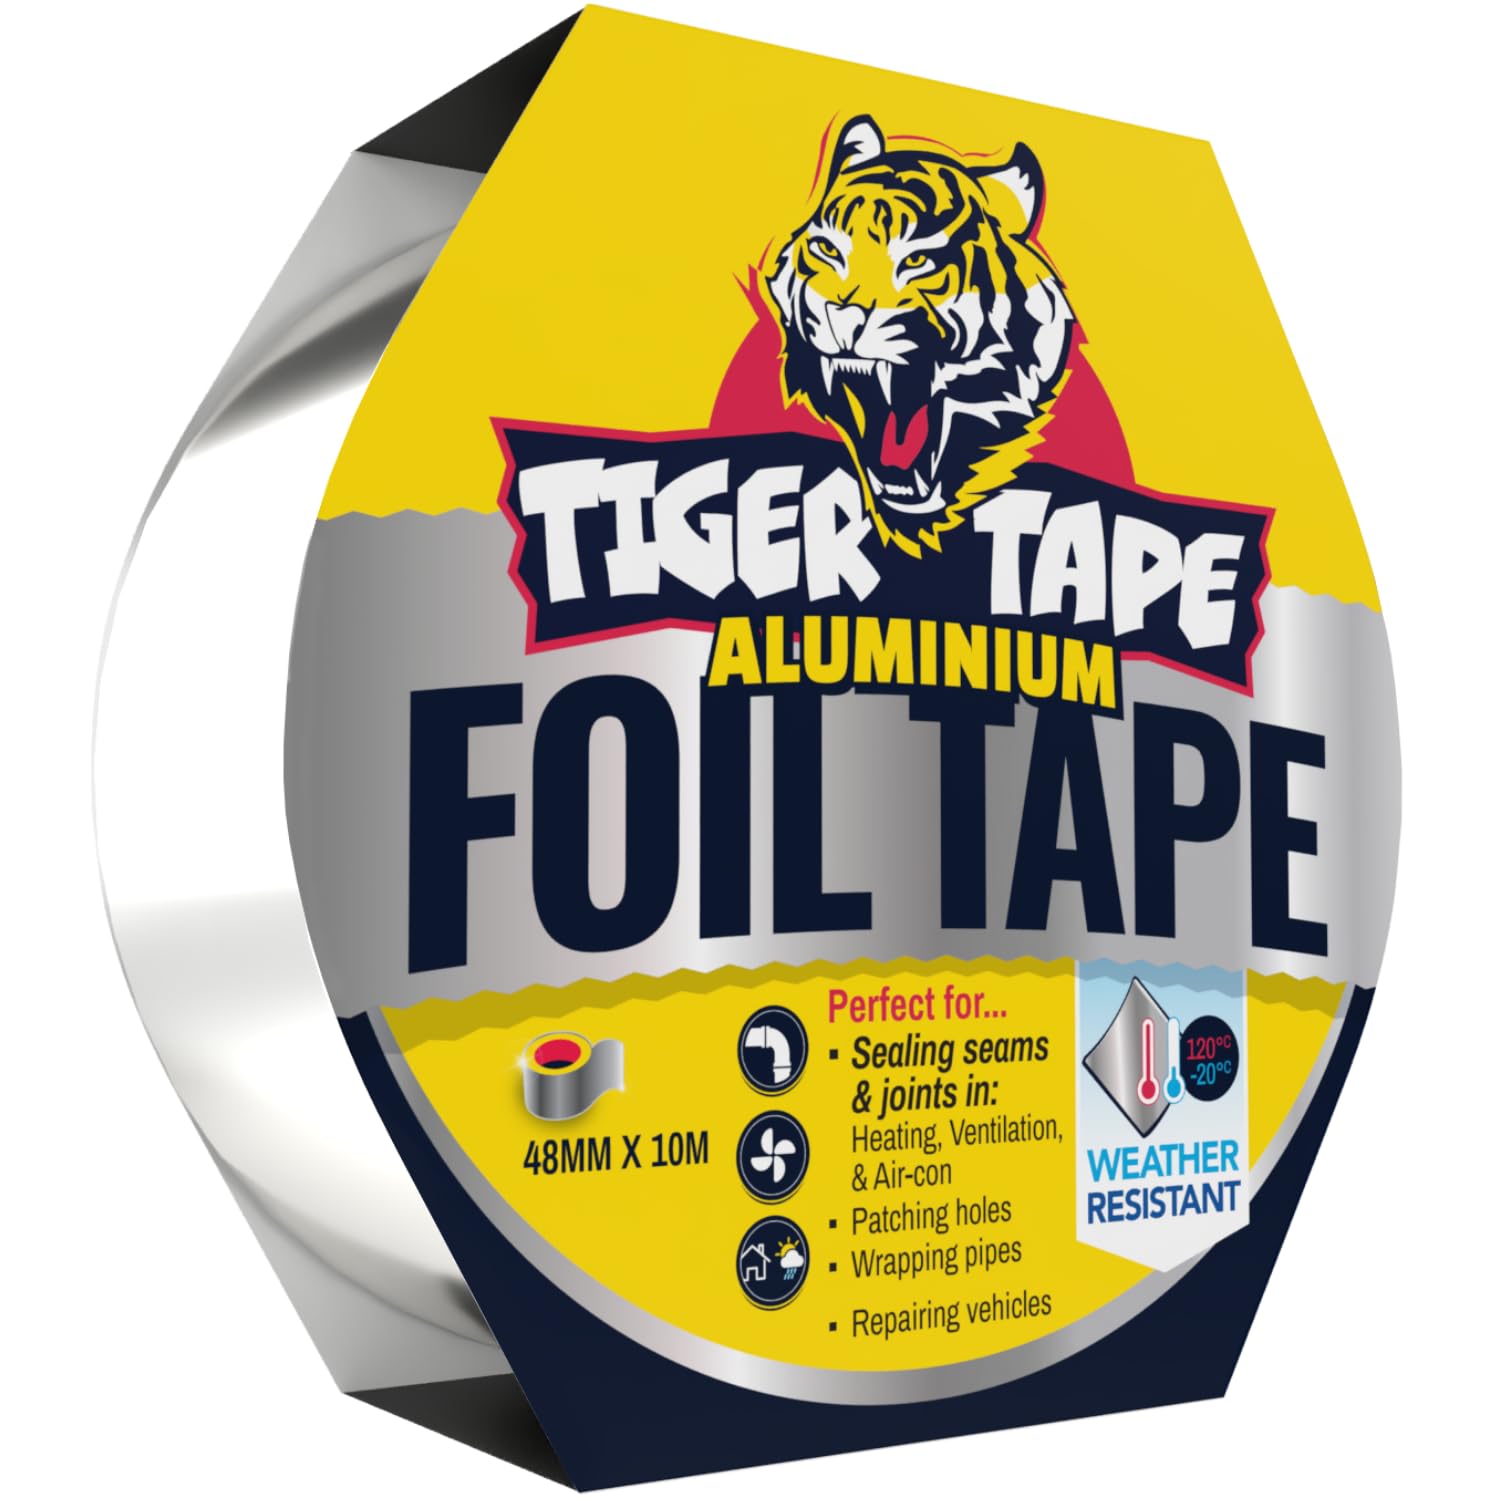 Tiger Tape Aluminium Foil Tape - 48mm x 10m